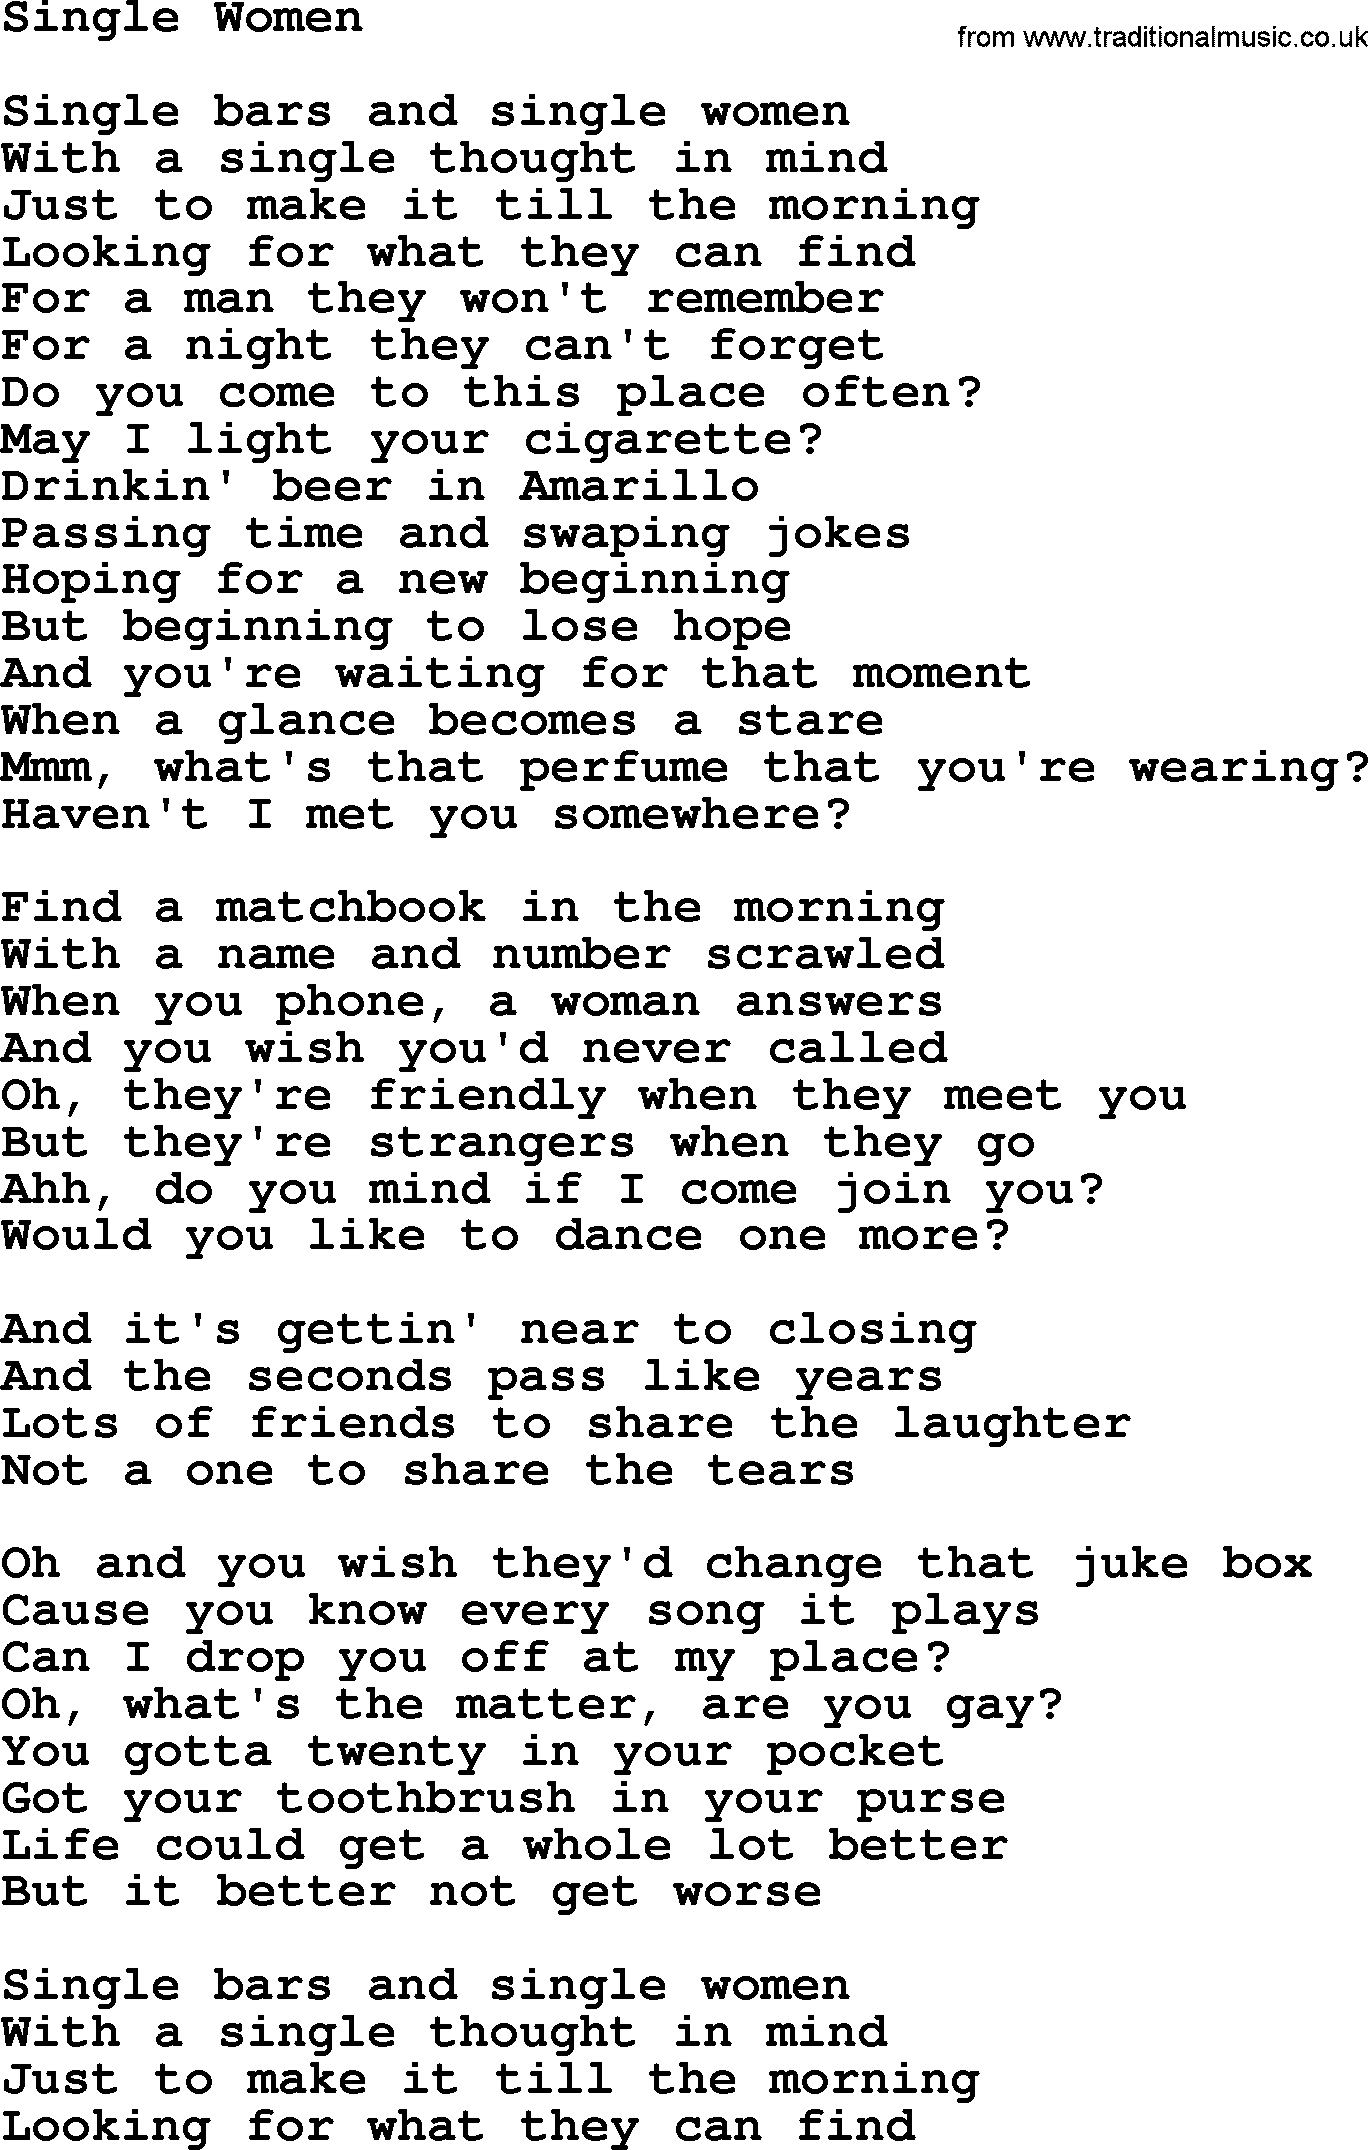 Dolly Parton song Single Women.txt lyrics